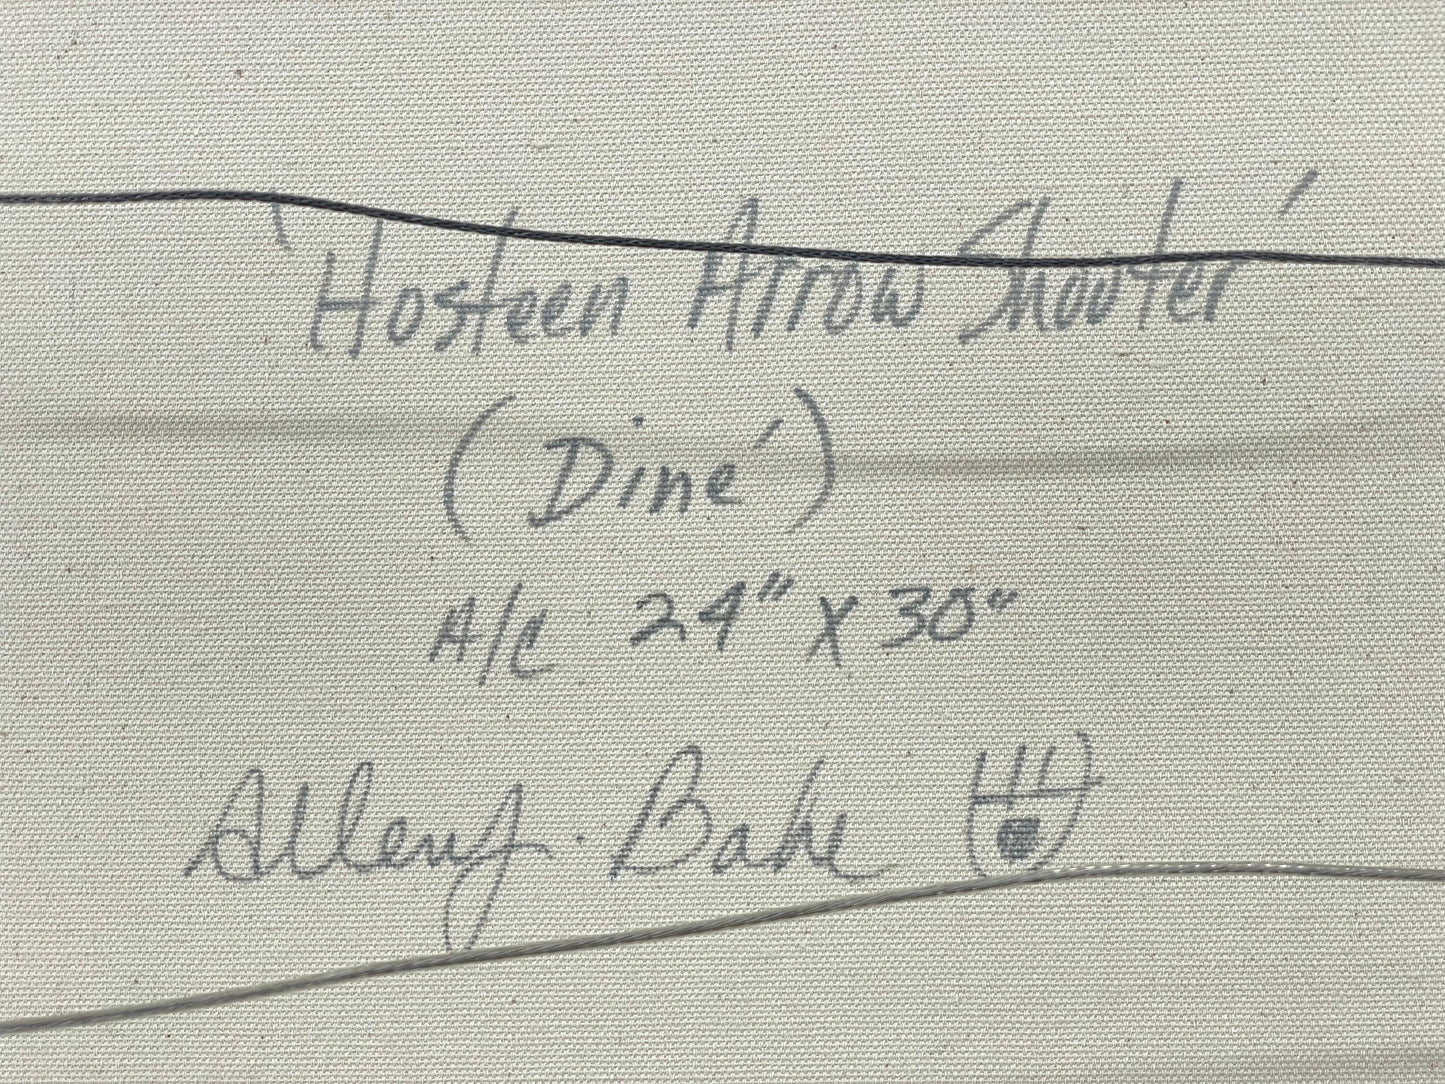 Al Bahe - Hosteen Arrow Shooter 30" x 24"